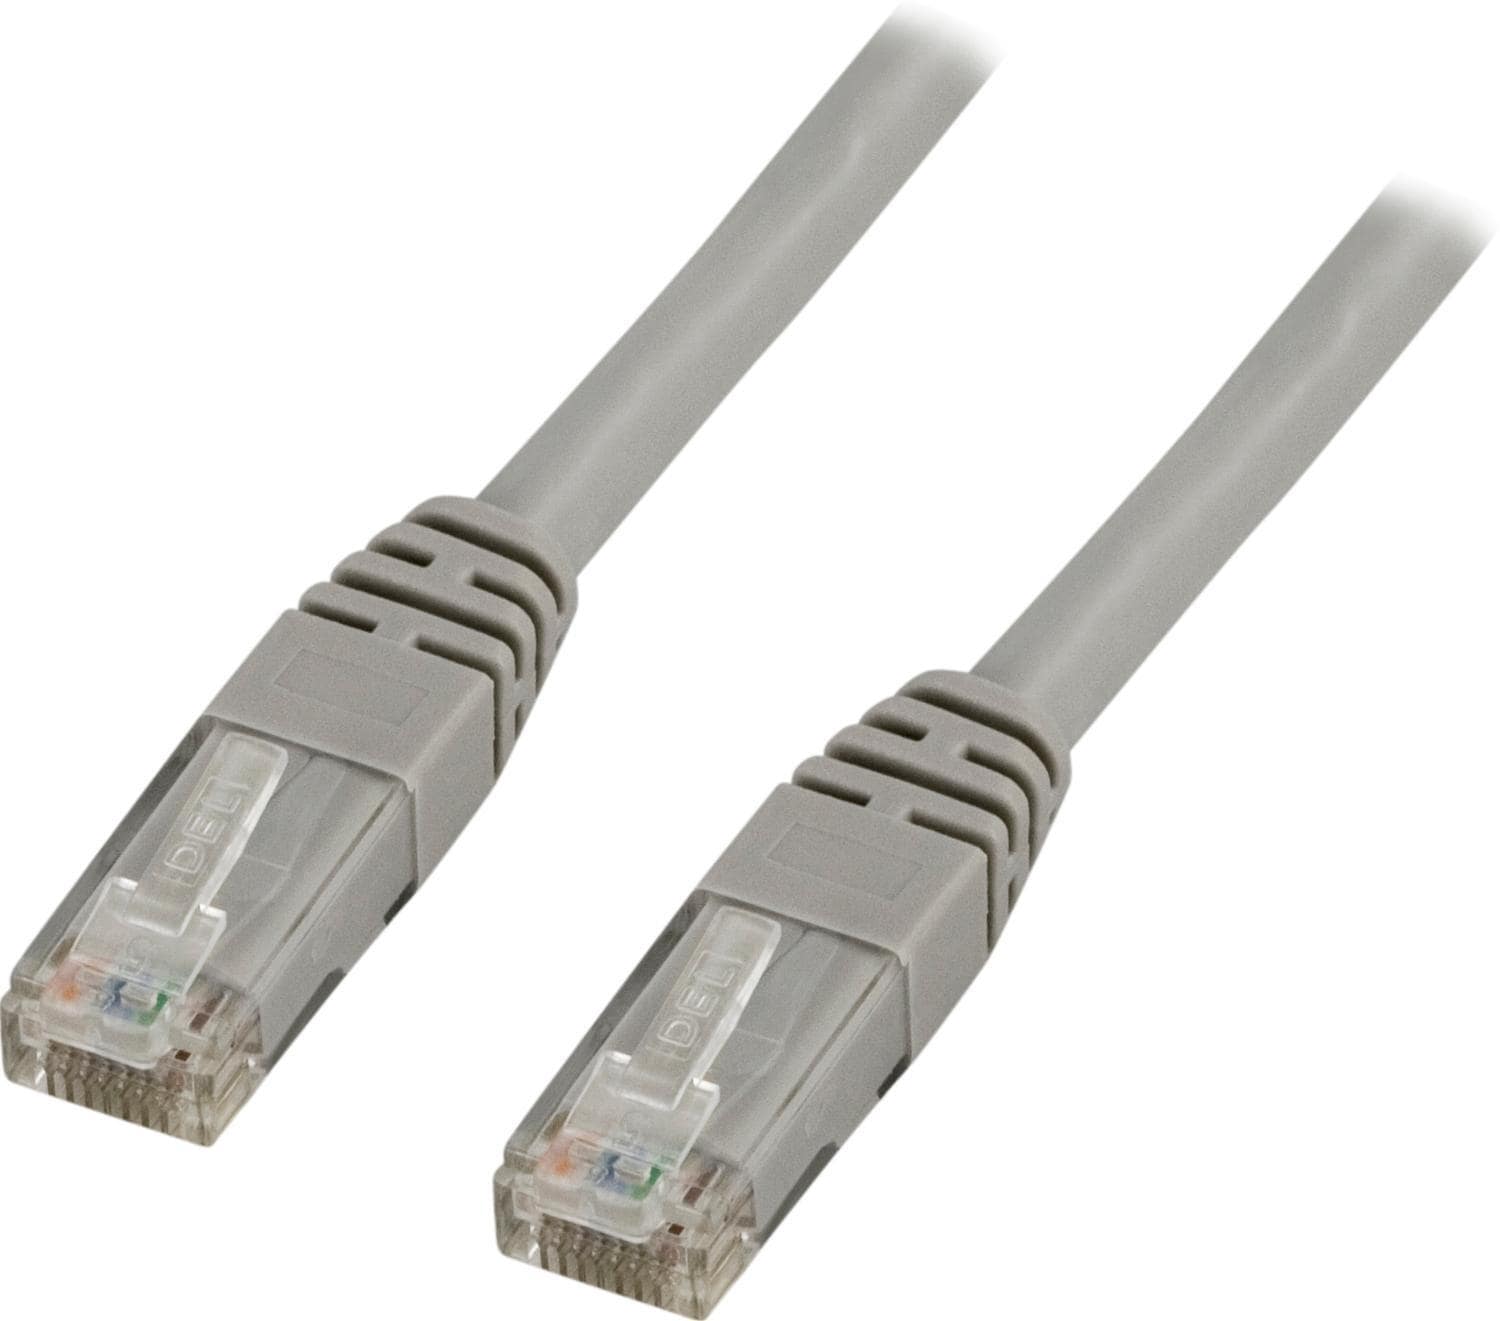 deltaco U/UTP Cat6 patch cable 50m, grey - Elkjøp